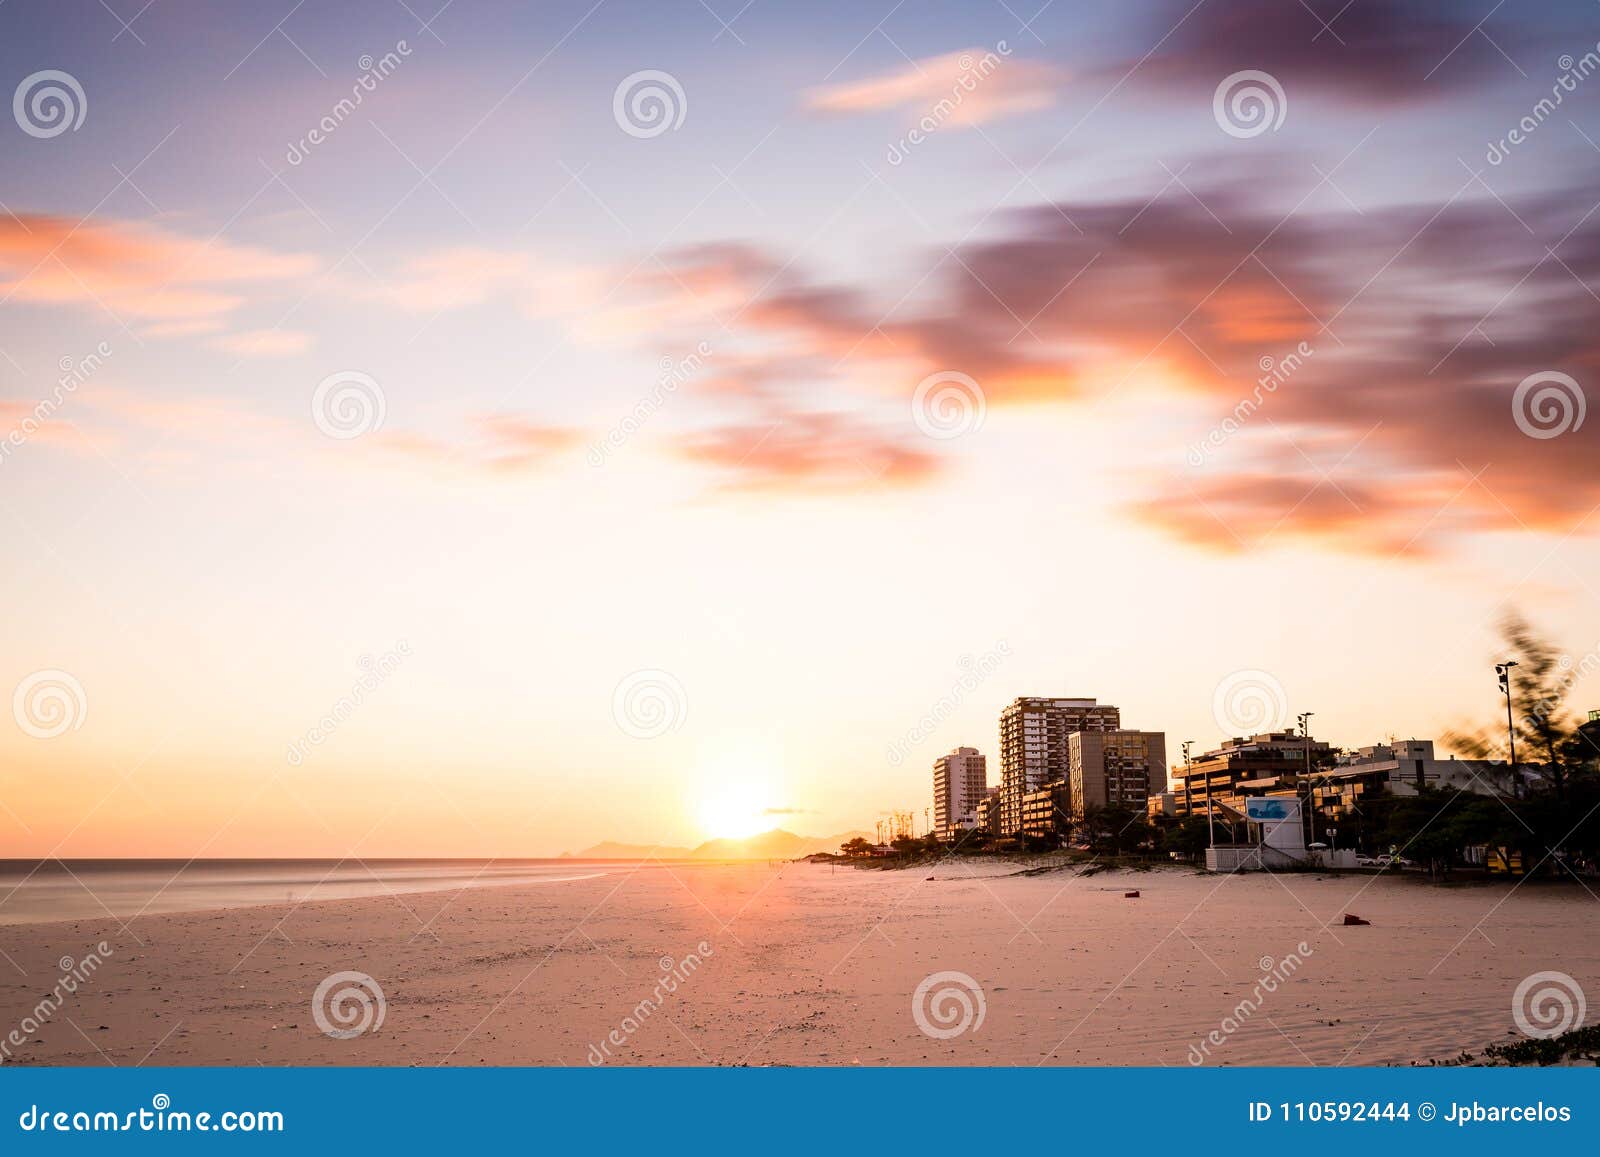 barra da tijuca jetty beach on a beatiful afternoon. long exposure